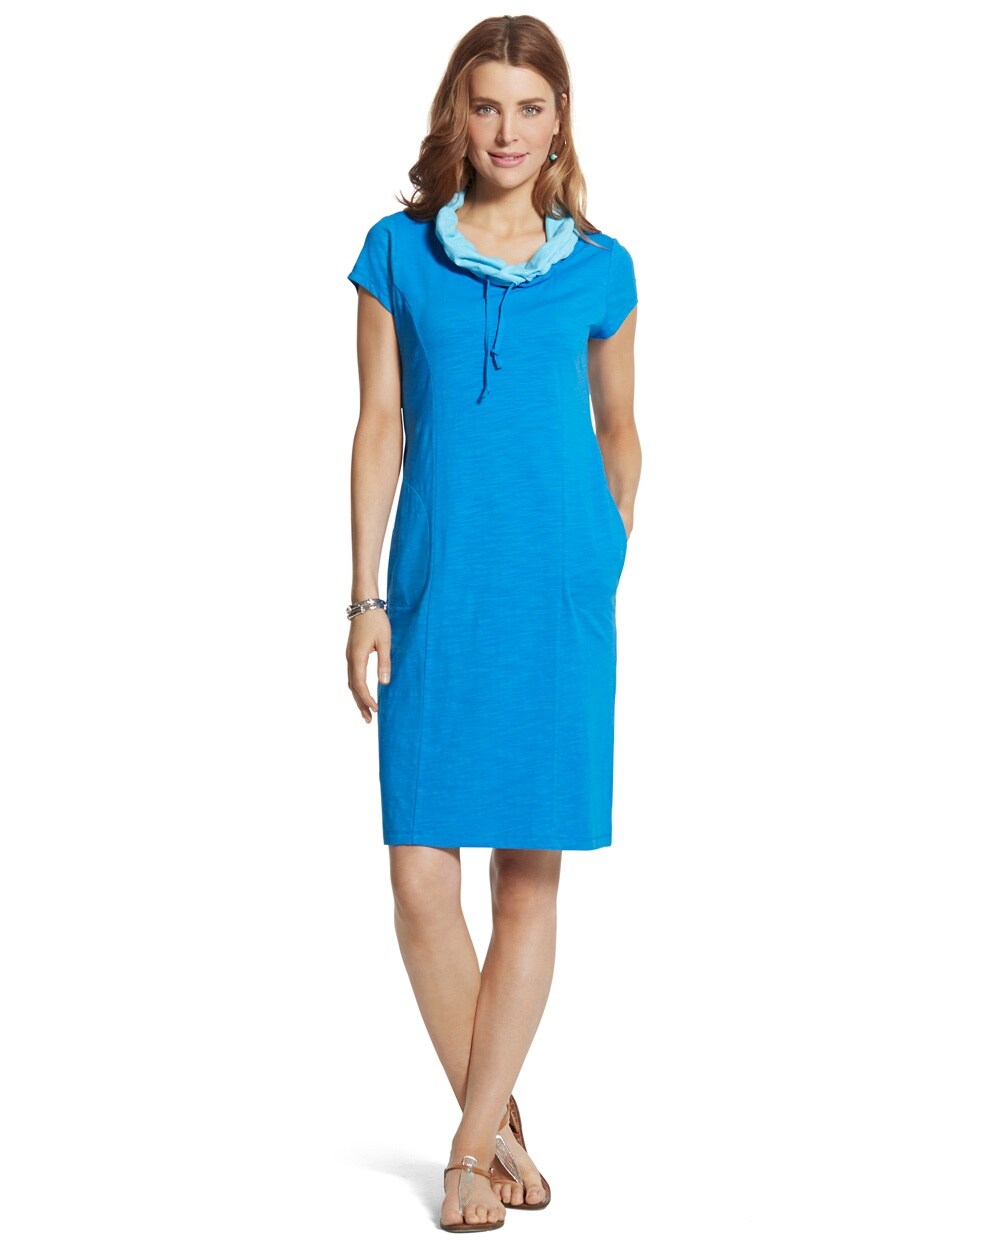 Zenergy Shea Knit Bi-Color Dress